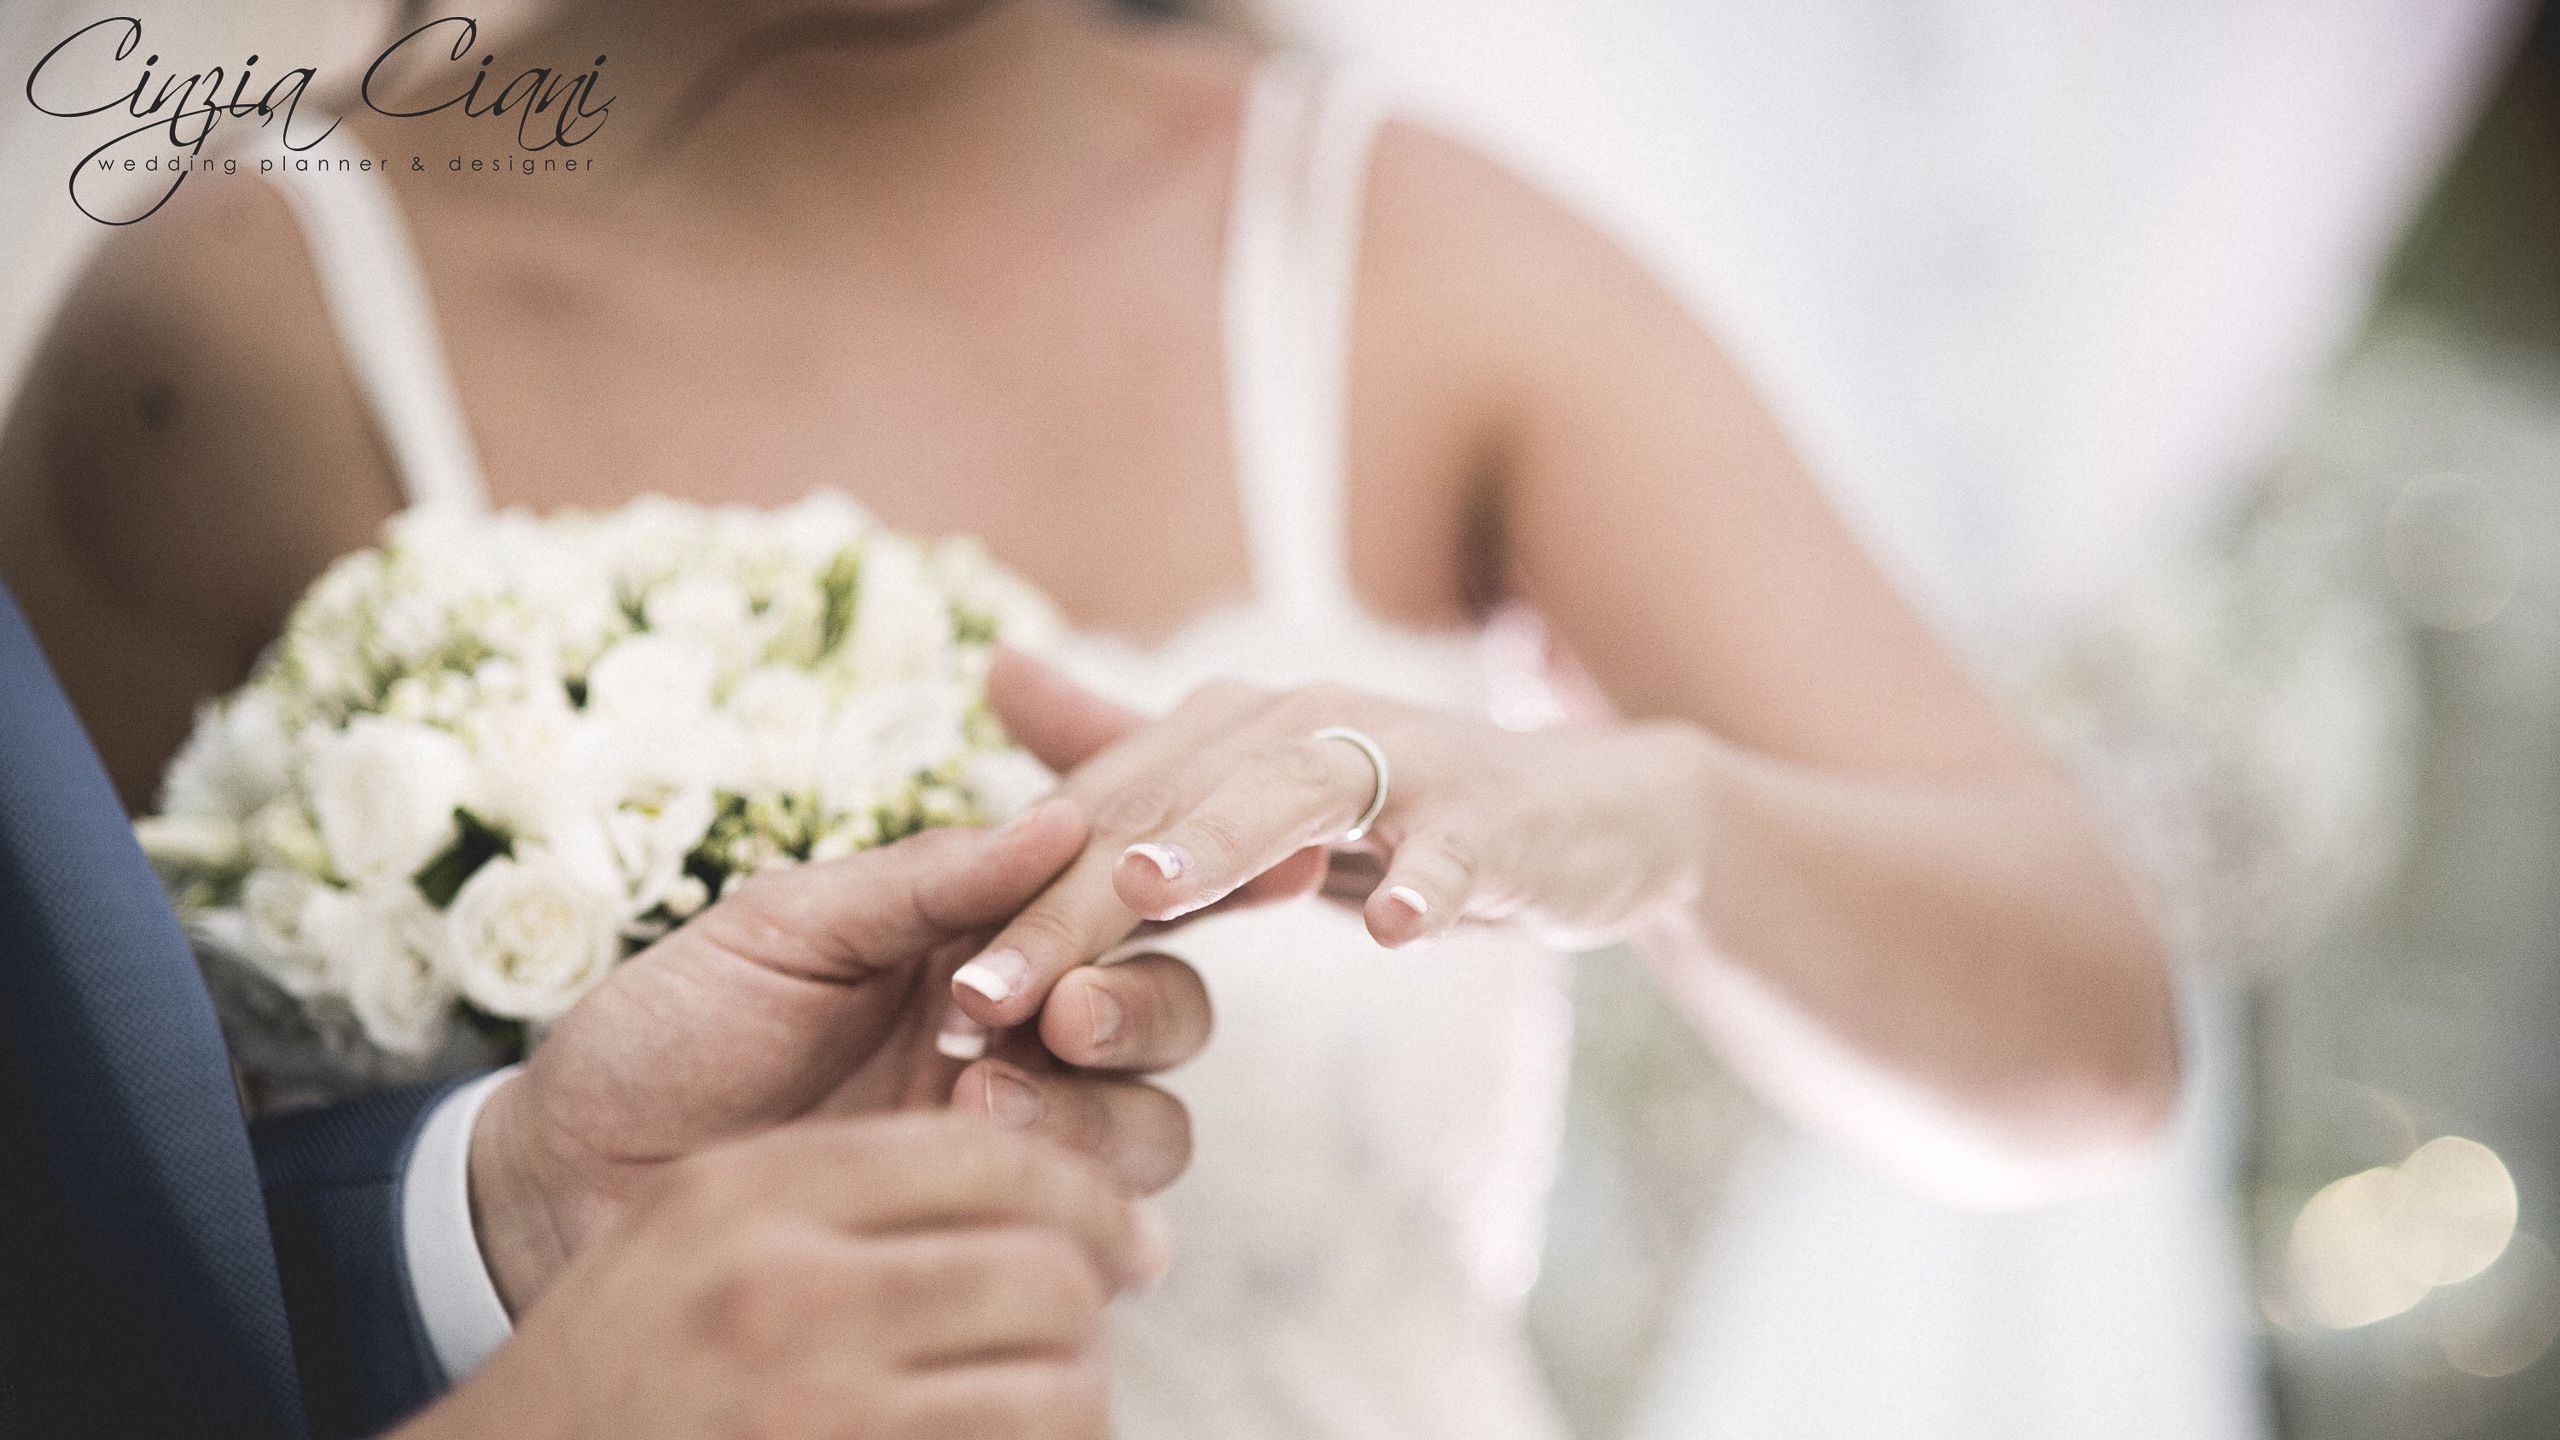 IMG-1369-Wedding-Planner-Designer-Rome-cinzia-ciani-weddings-events